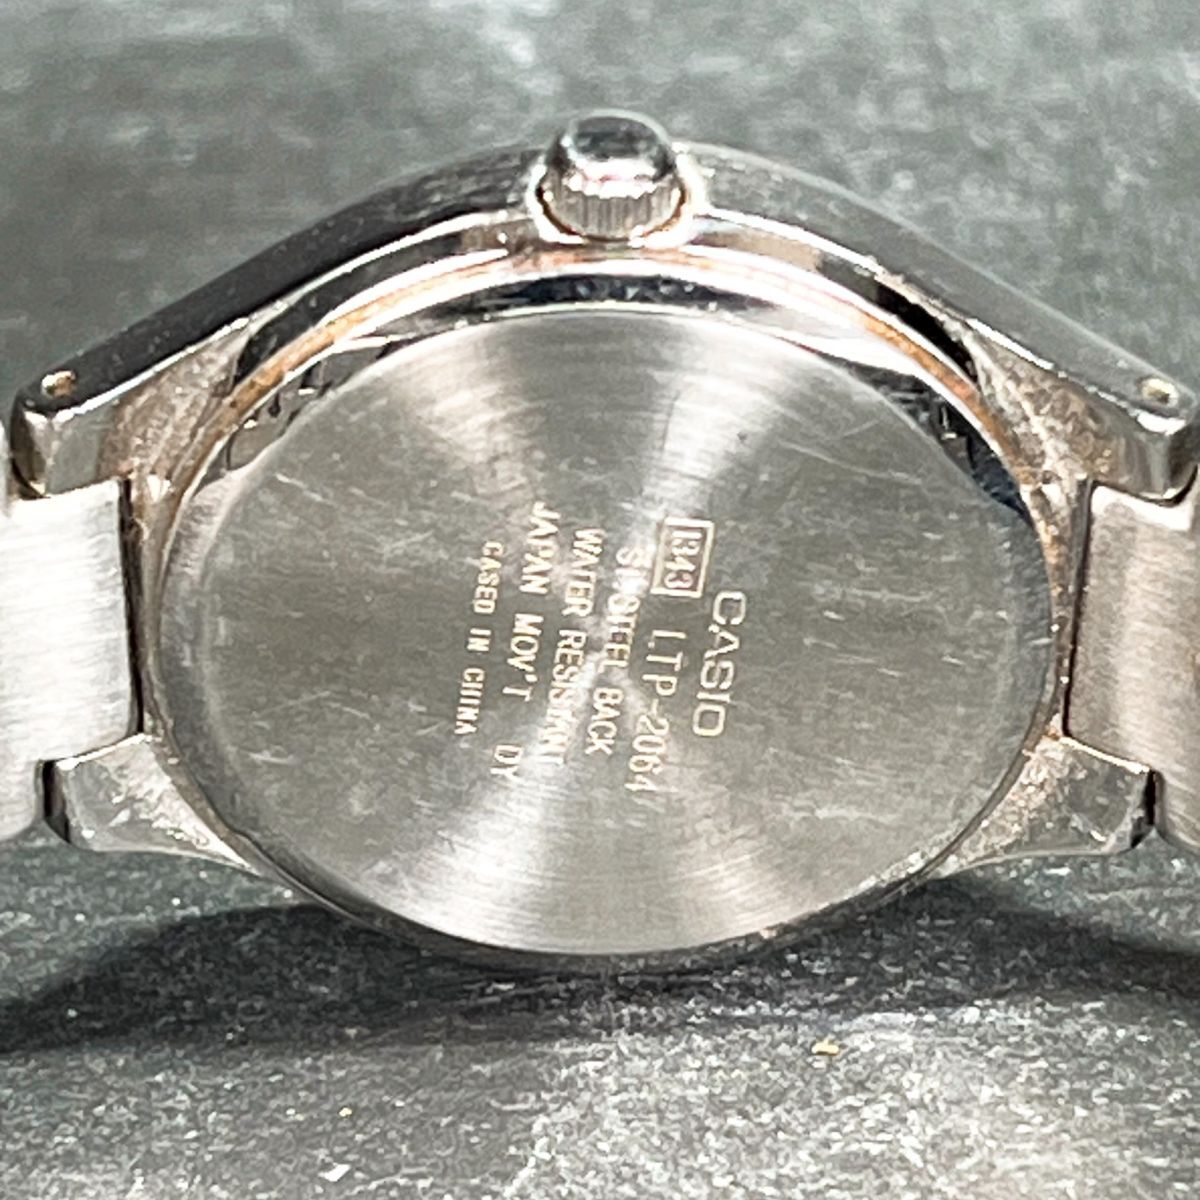 CASIO カシオ LTP2064A-7A2 腕時計 アナログ クオーツ 3針 オフホワイト文字盤 シルバー メタルベルト ステンレス 新品電池交換済み_画像7